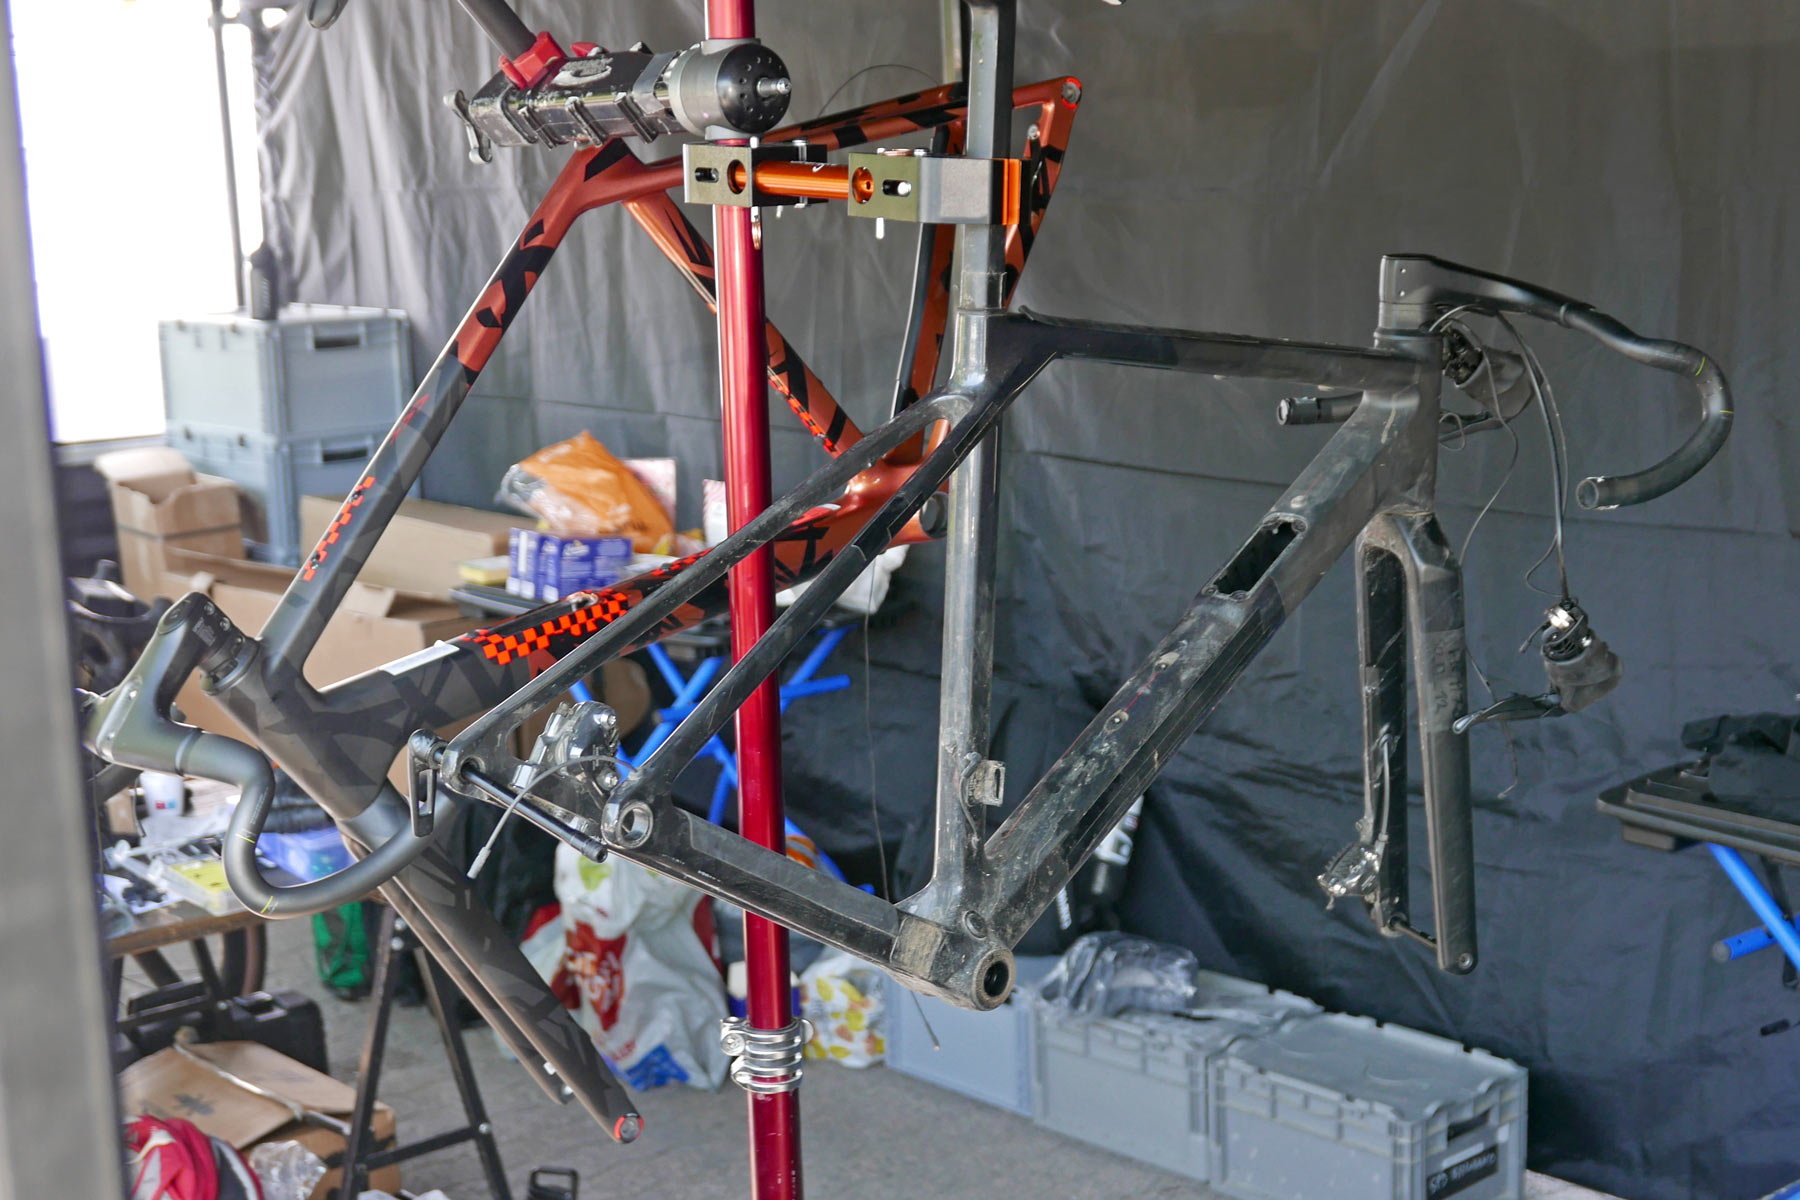 Canyon CFR prototype gravel race bike at FNLD GRVL, bike build raw frame